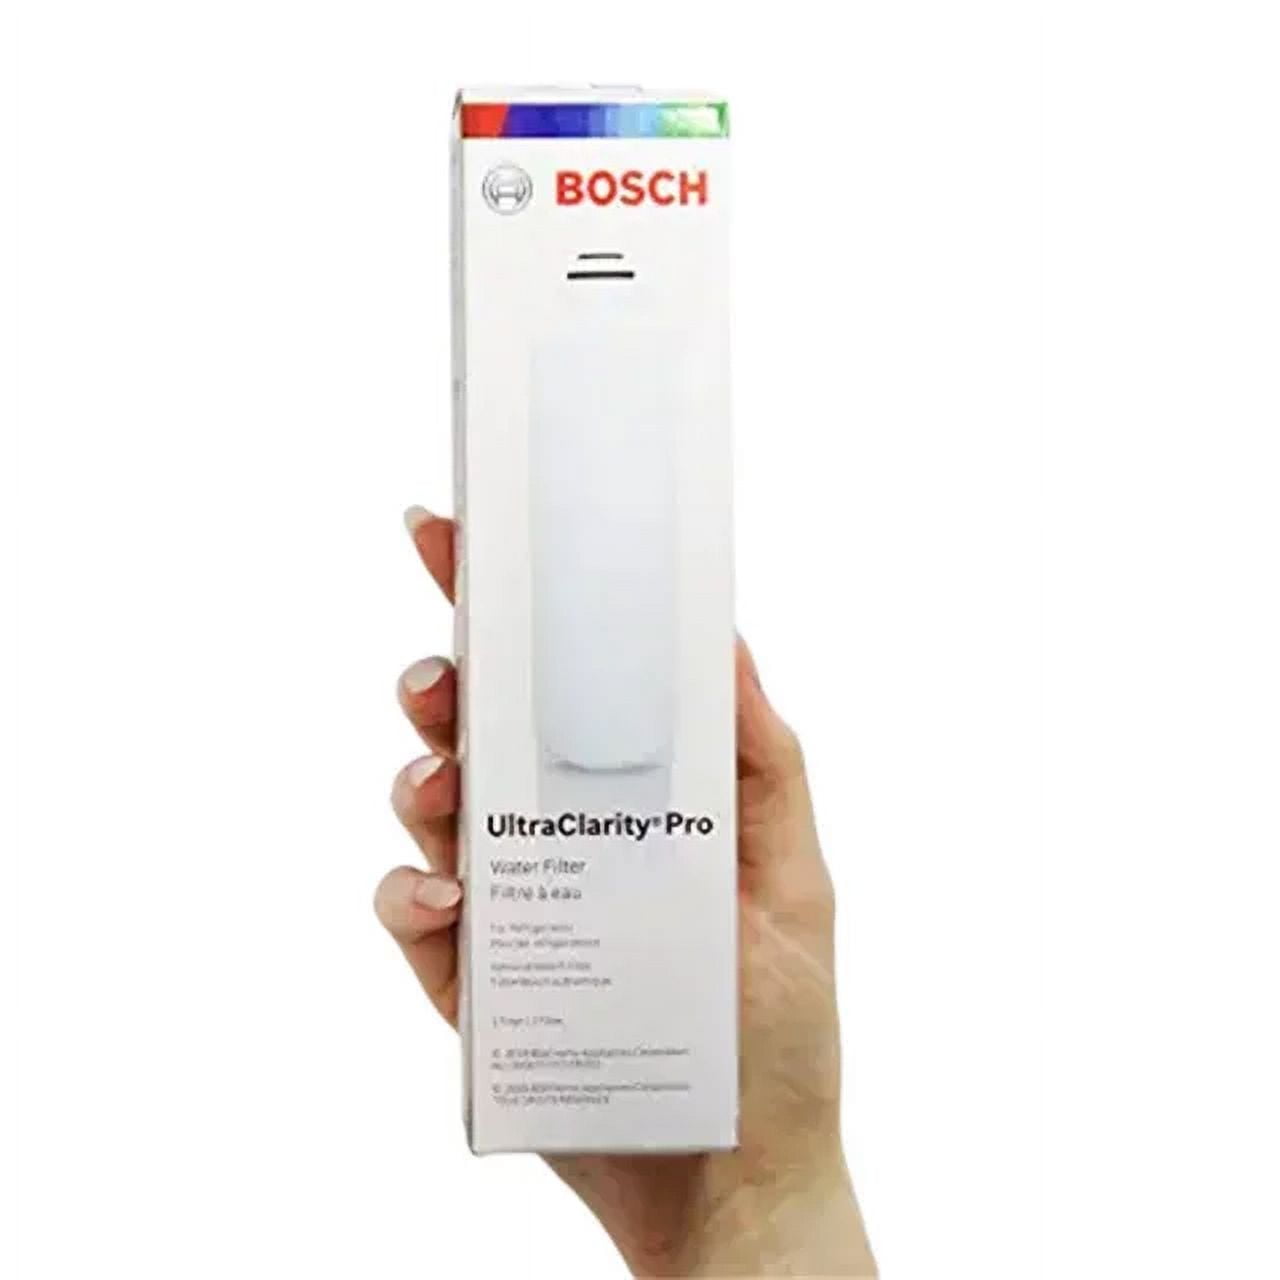 Bosch UltraClarity Pro BORPLFTR50 BORPLFTR55 12033030 Refrigerator Water Filter, 1-Pack -New in Box